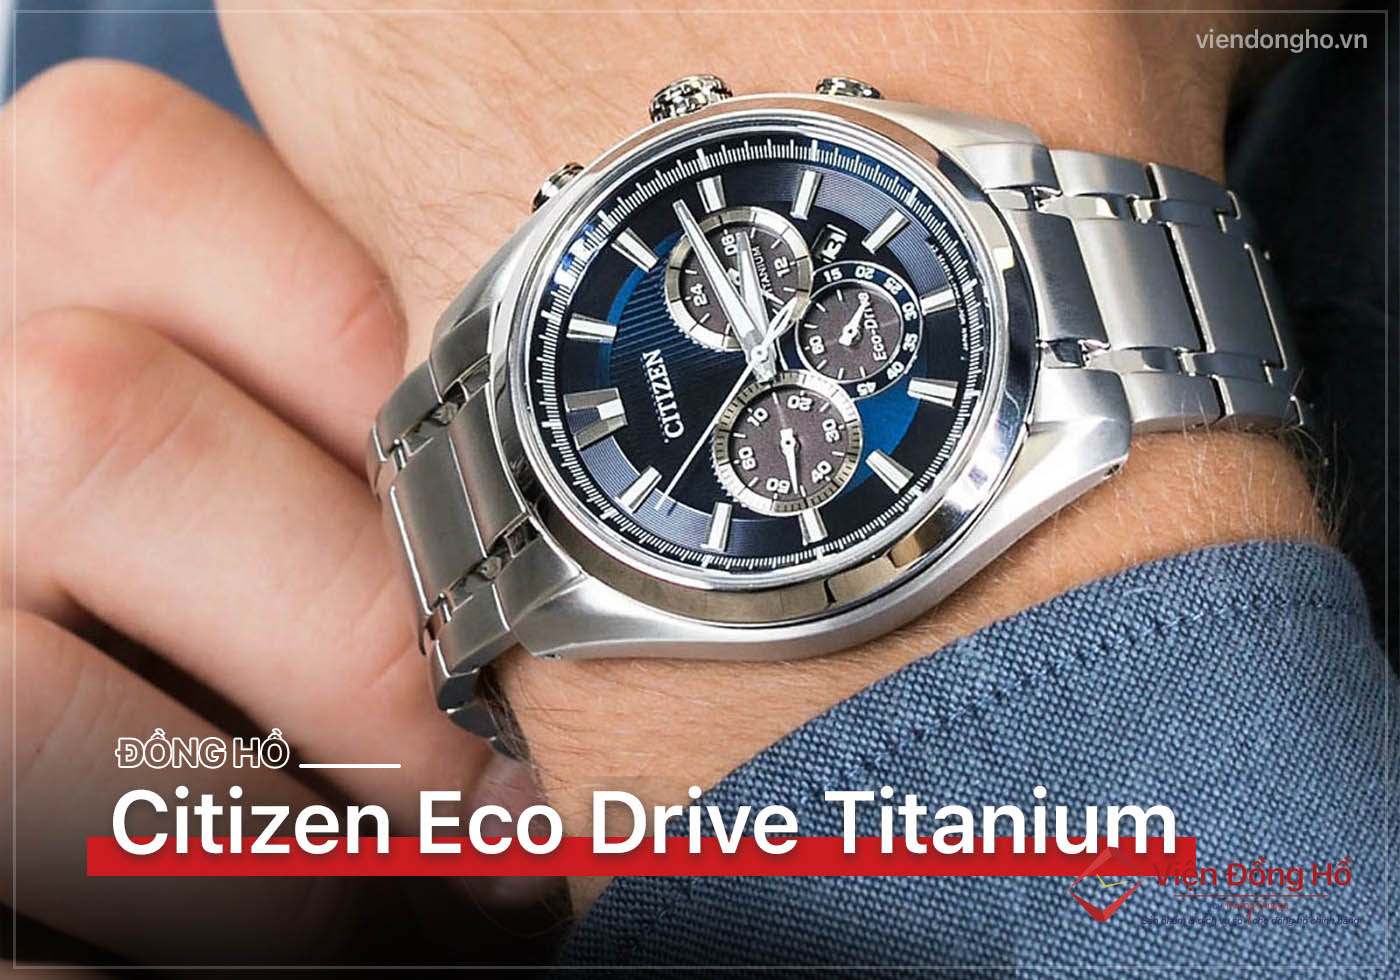 Co gi trong mau dong ho Citizen Eco Drive Titanium 9